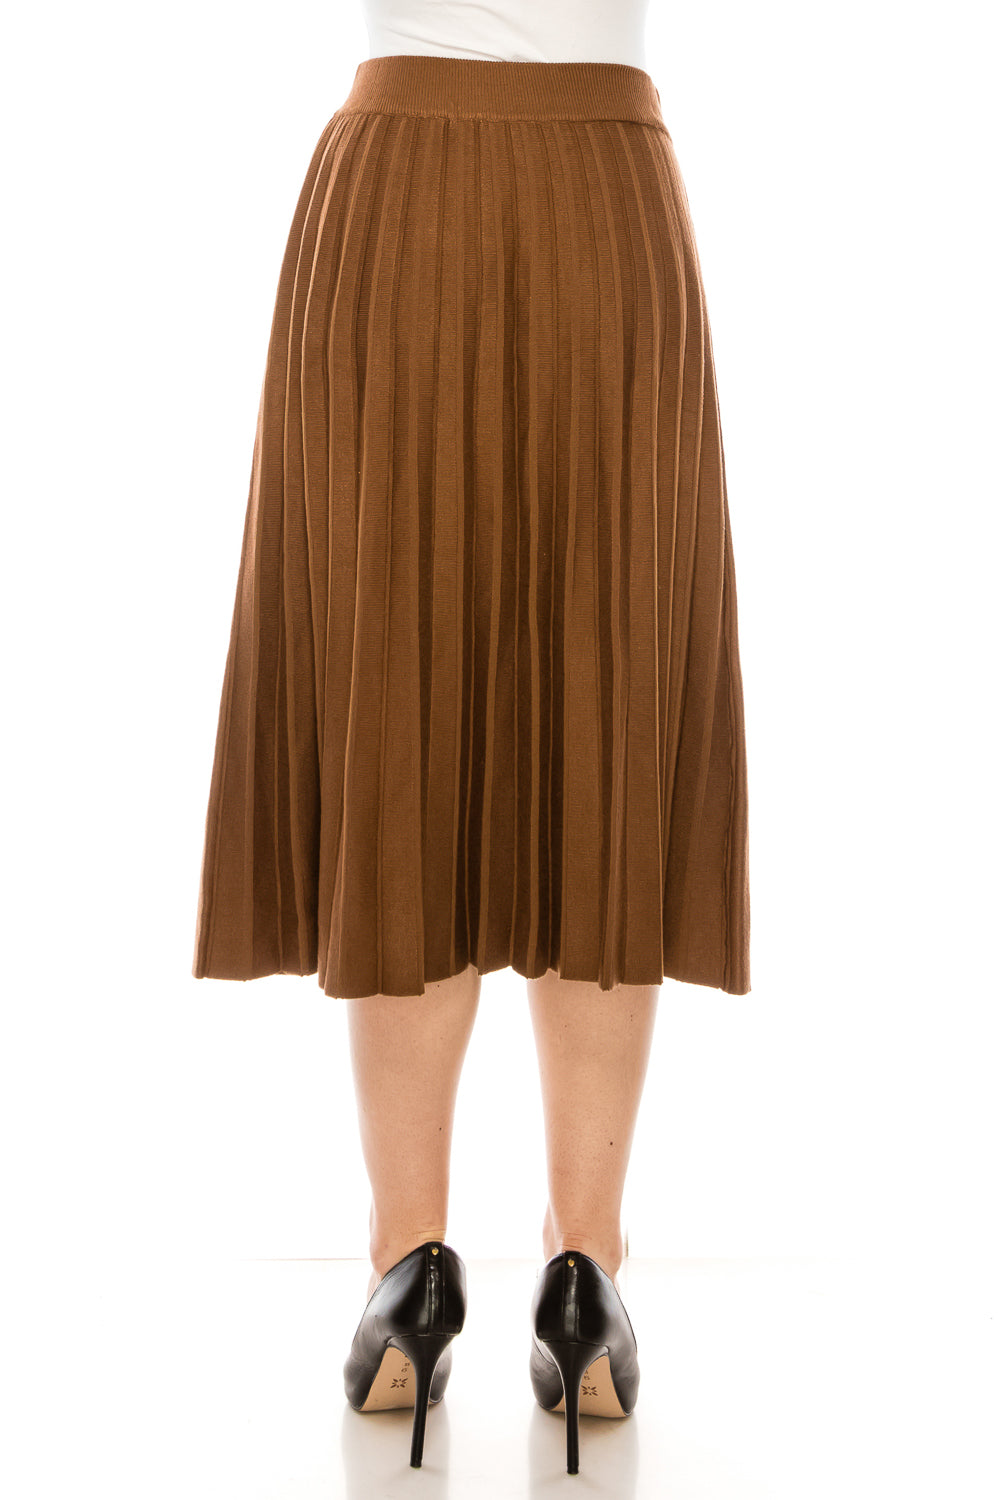 Rust Knit Pleated Skirt